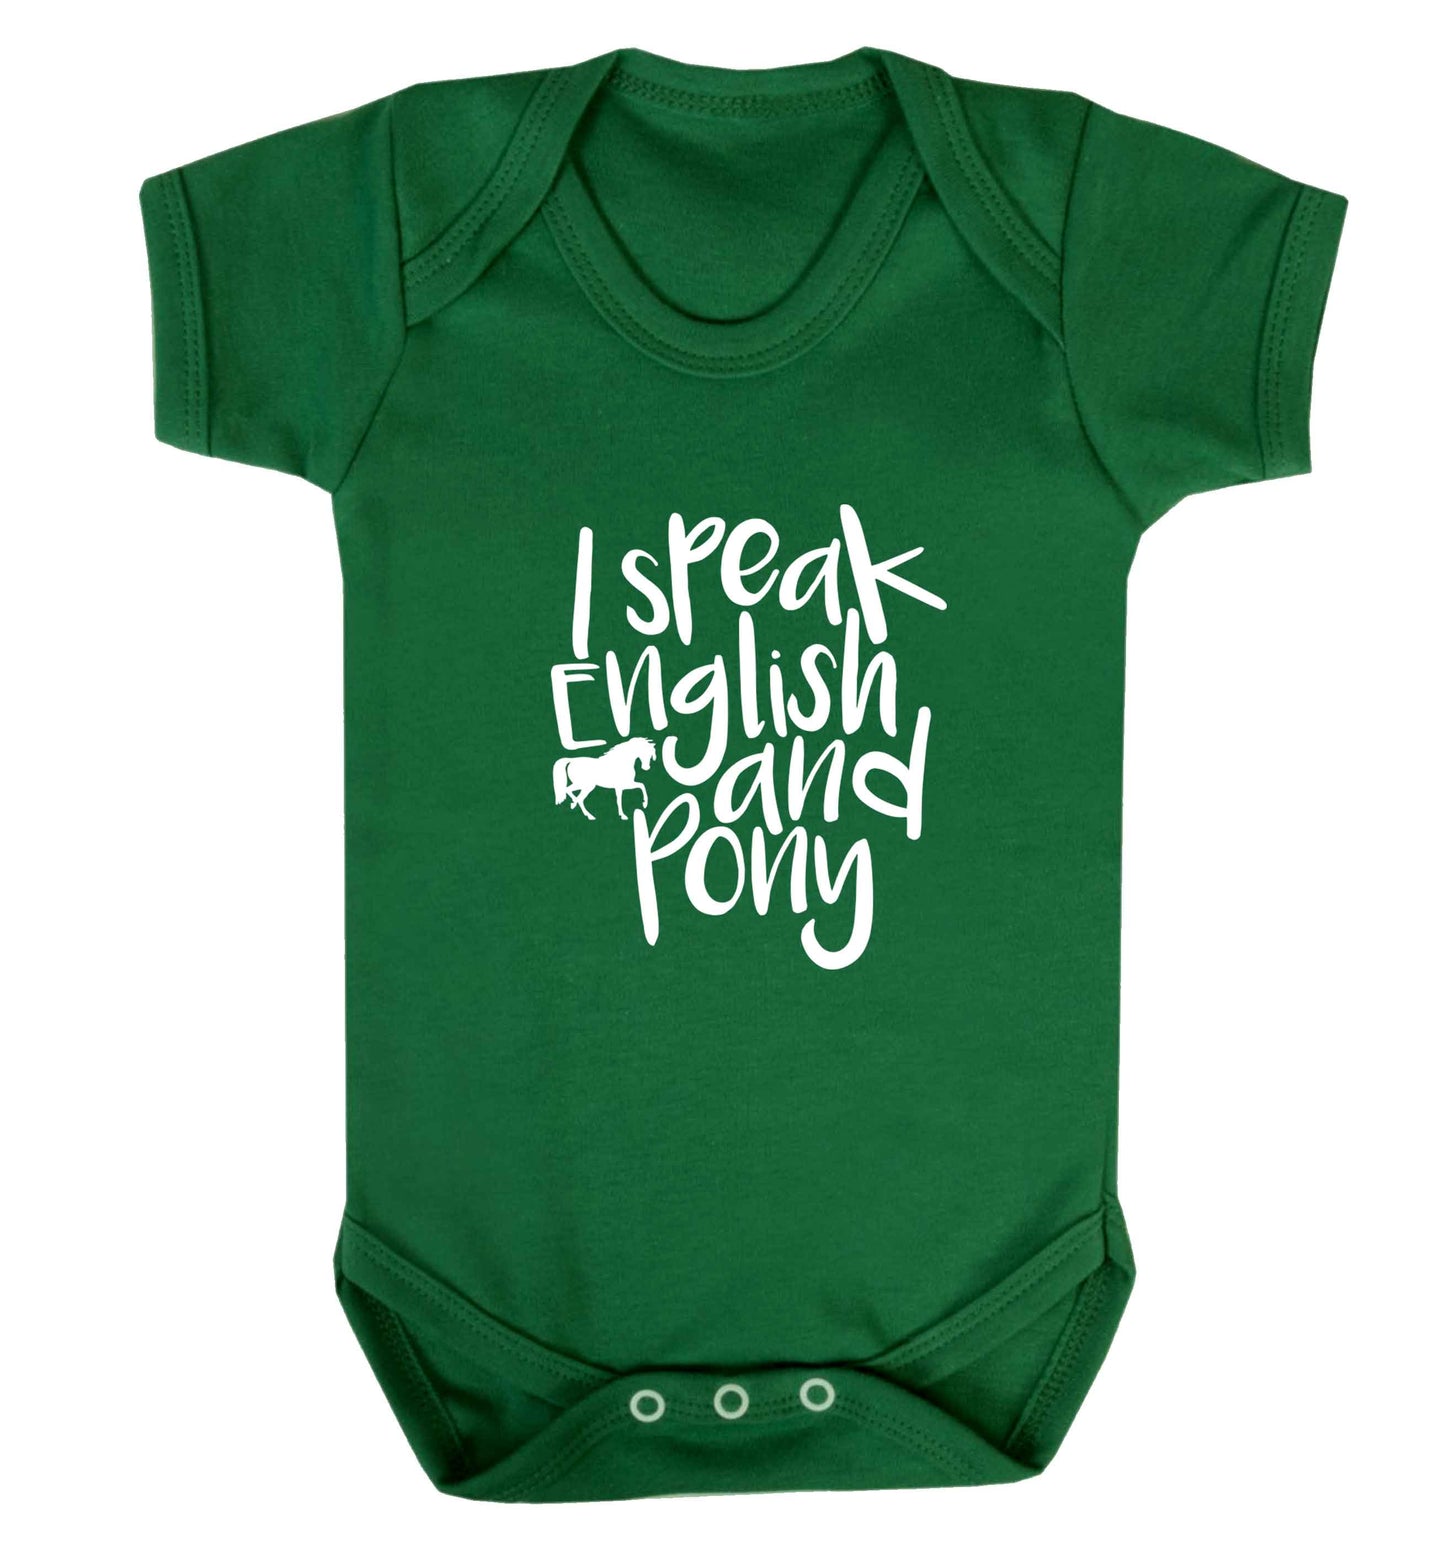 I speak English and pony baby vest green 18-24 months